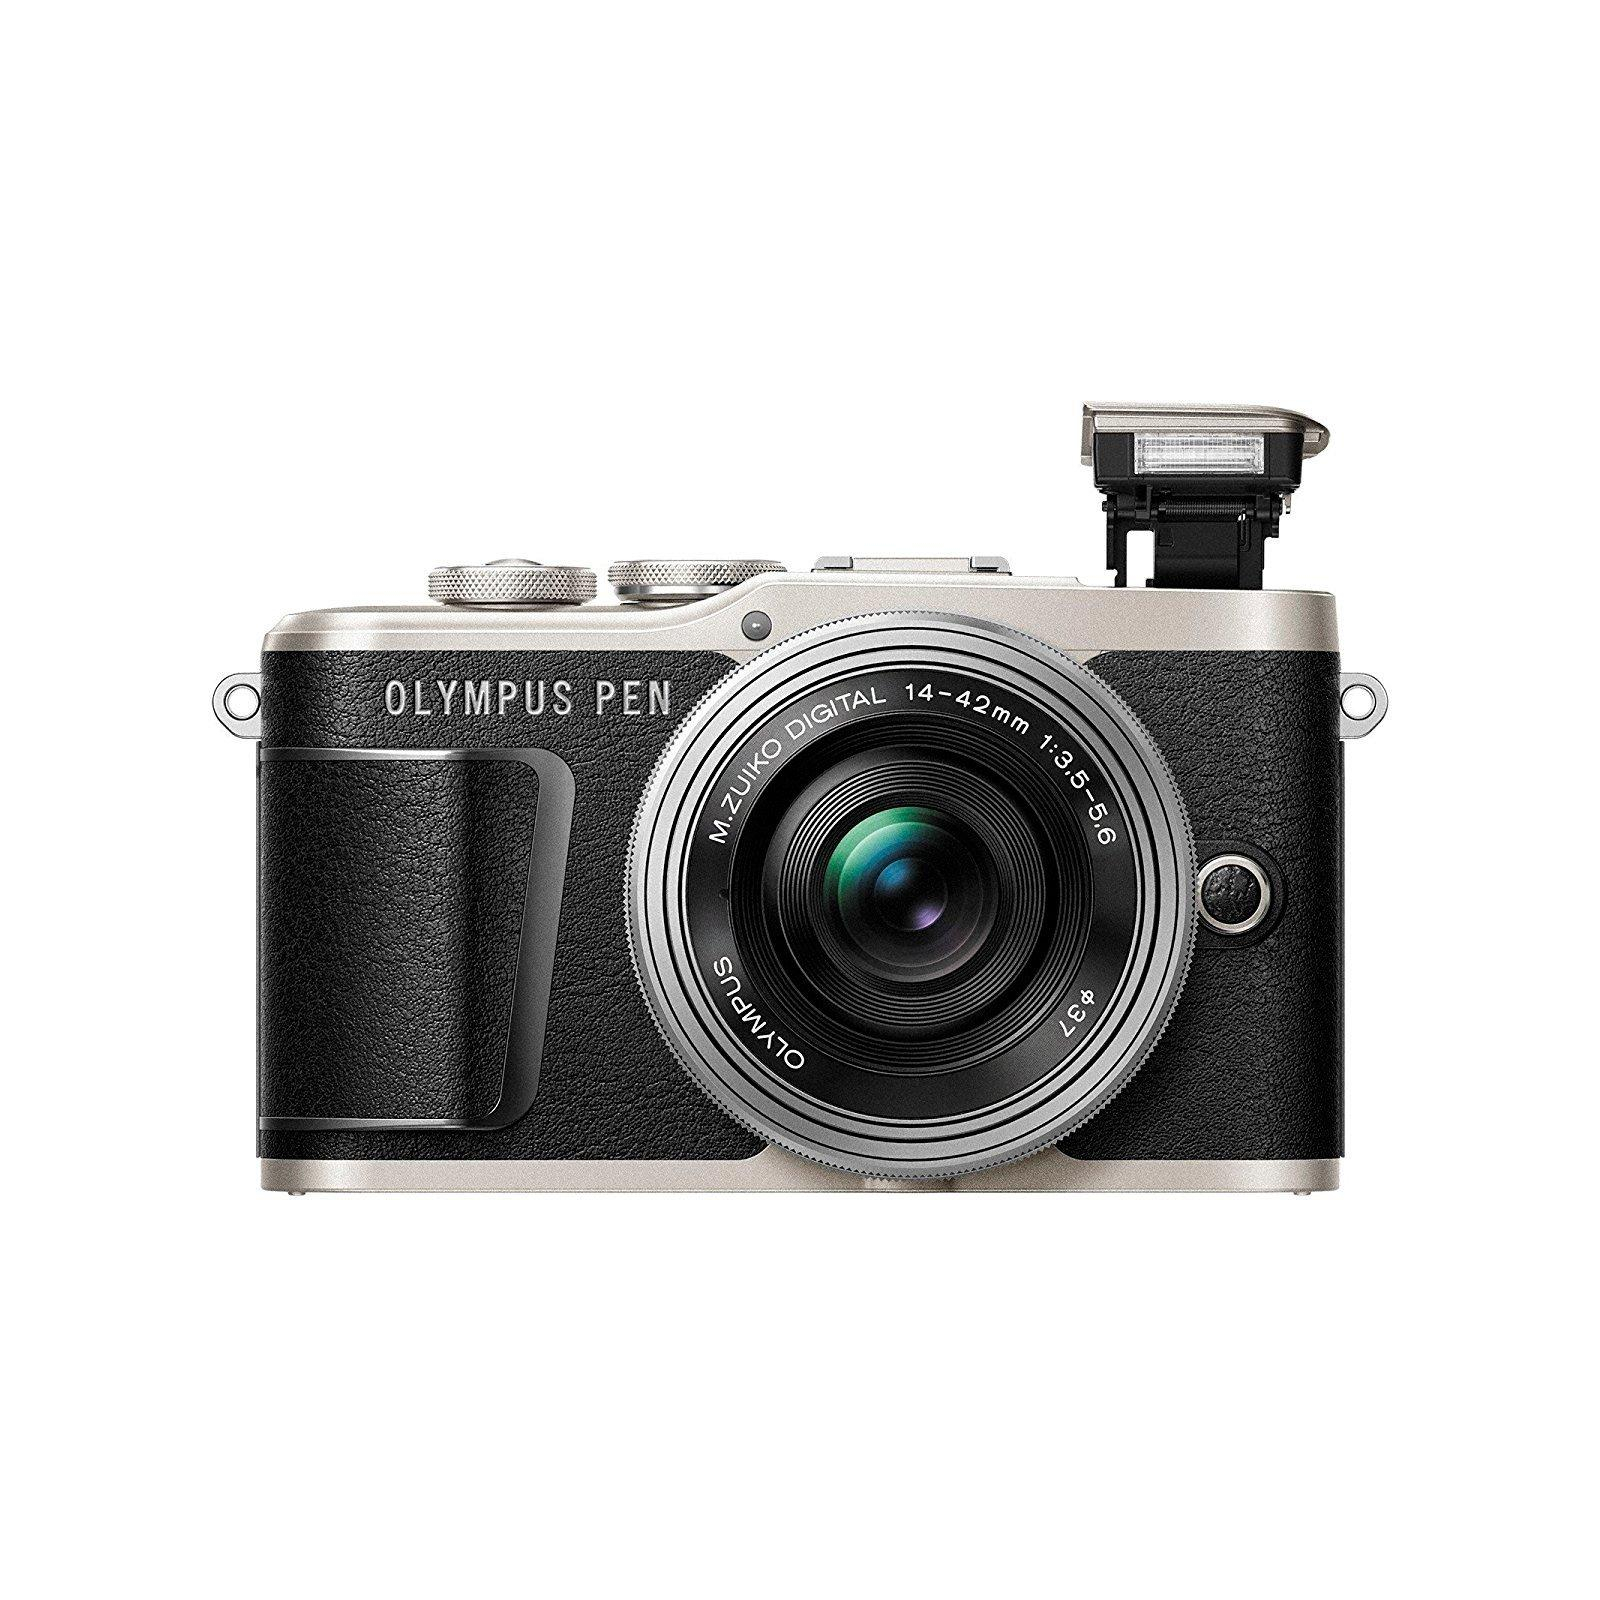 Цифровой фотоаппарат Olympus E-PL9 14-42 mm Pancake Zoom Kit black/silver (V205092BE000) изображение 4